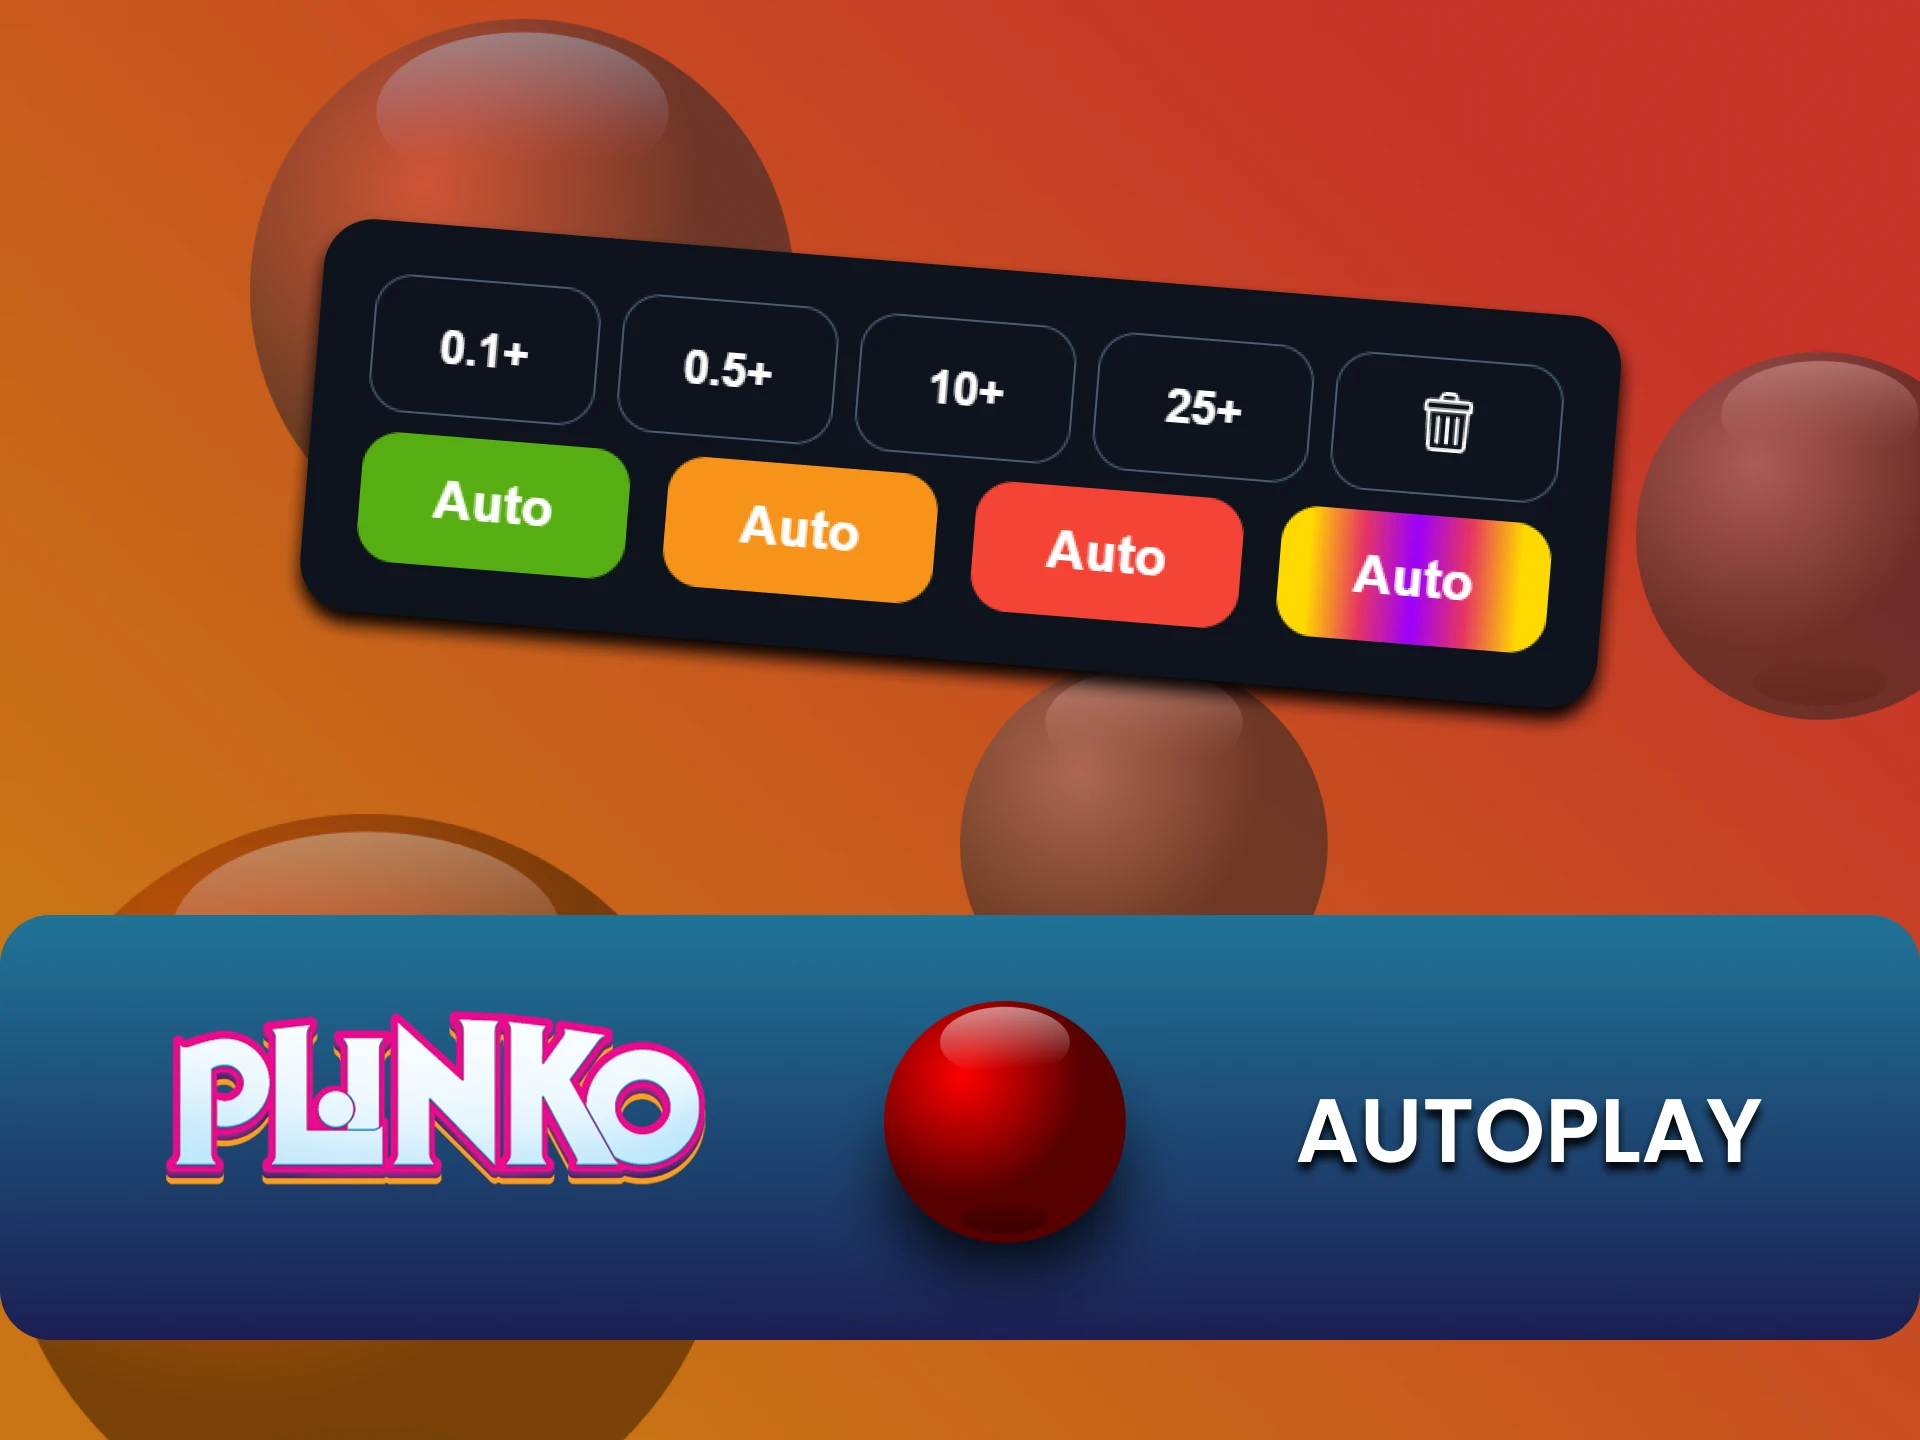 You can set Plinko to autoplay.